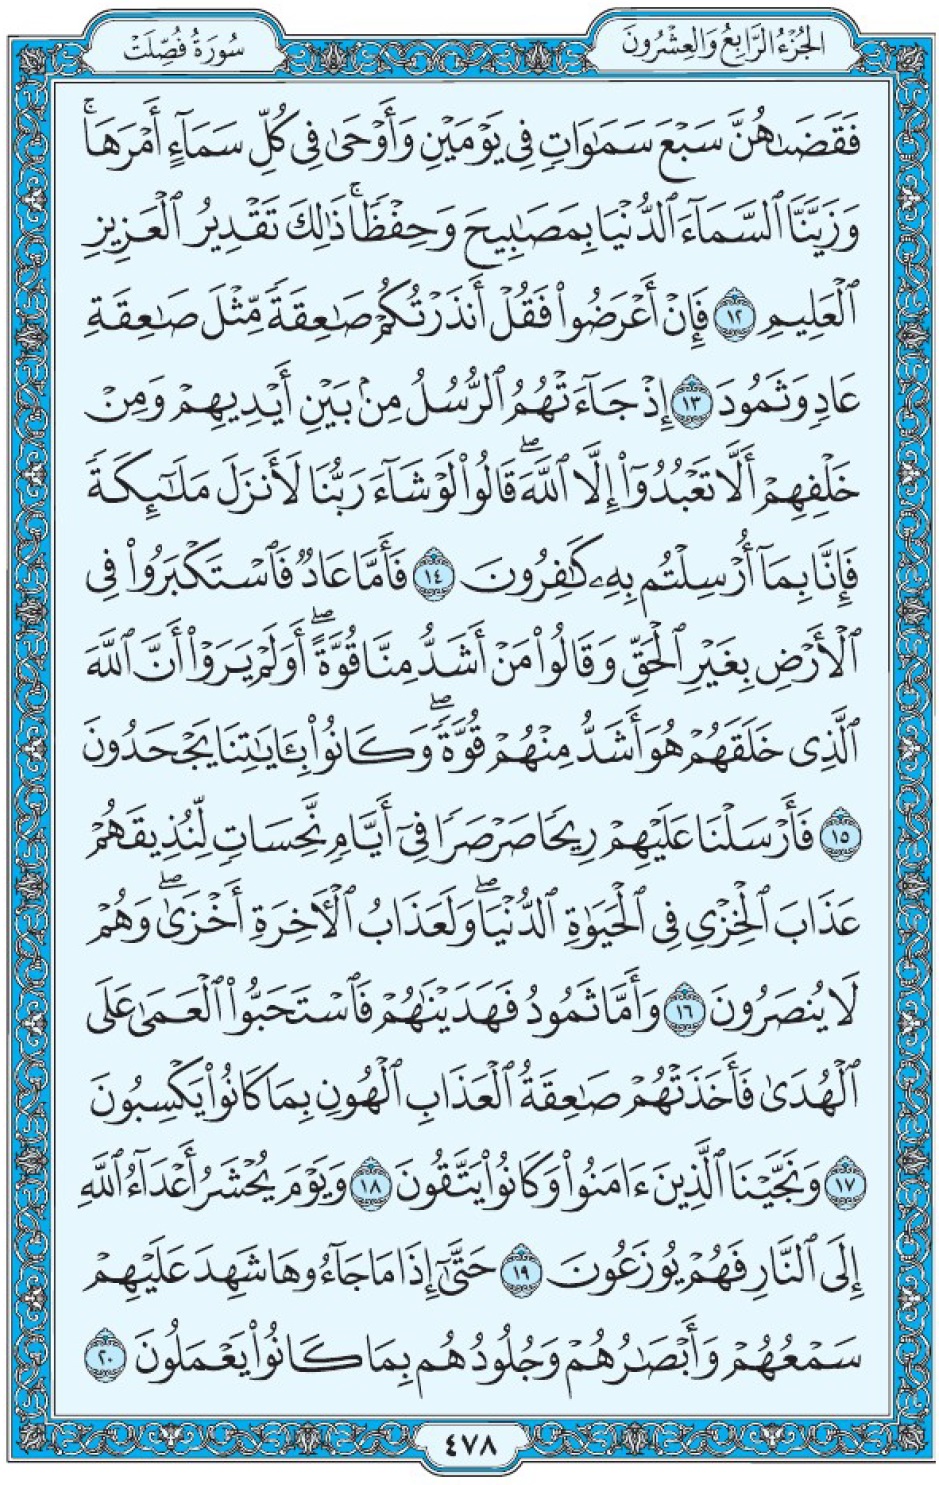 Коран Мединский мусхаф страница 478, Фуссылят, аят 12-20